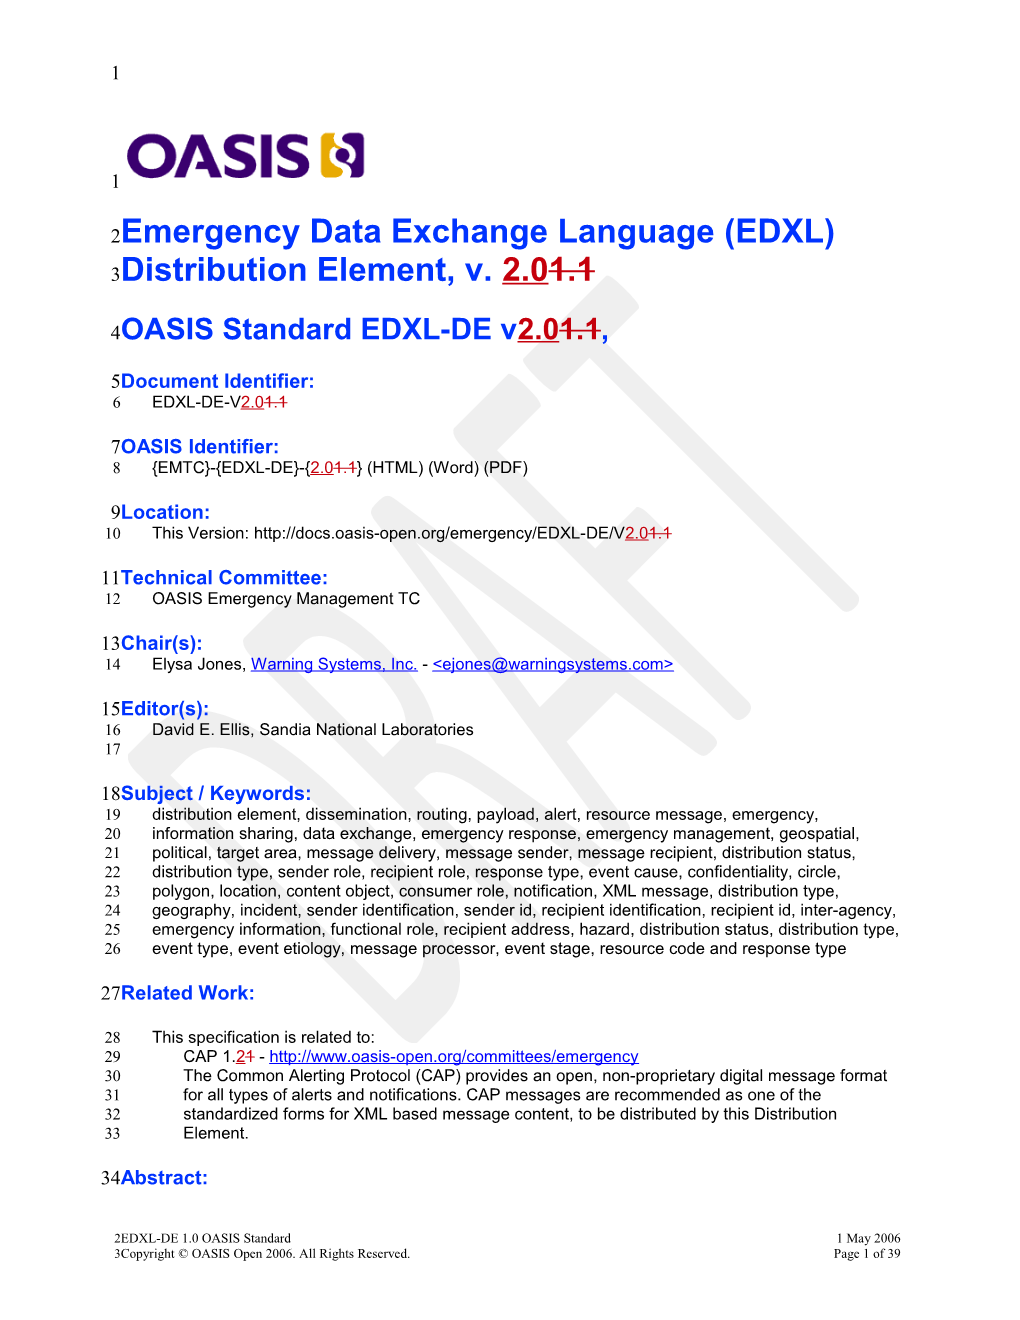 Emergency Data Exchange Language (EDXL) Distribution Element